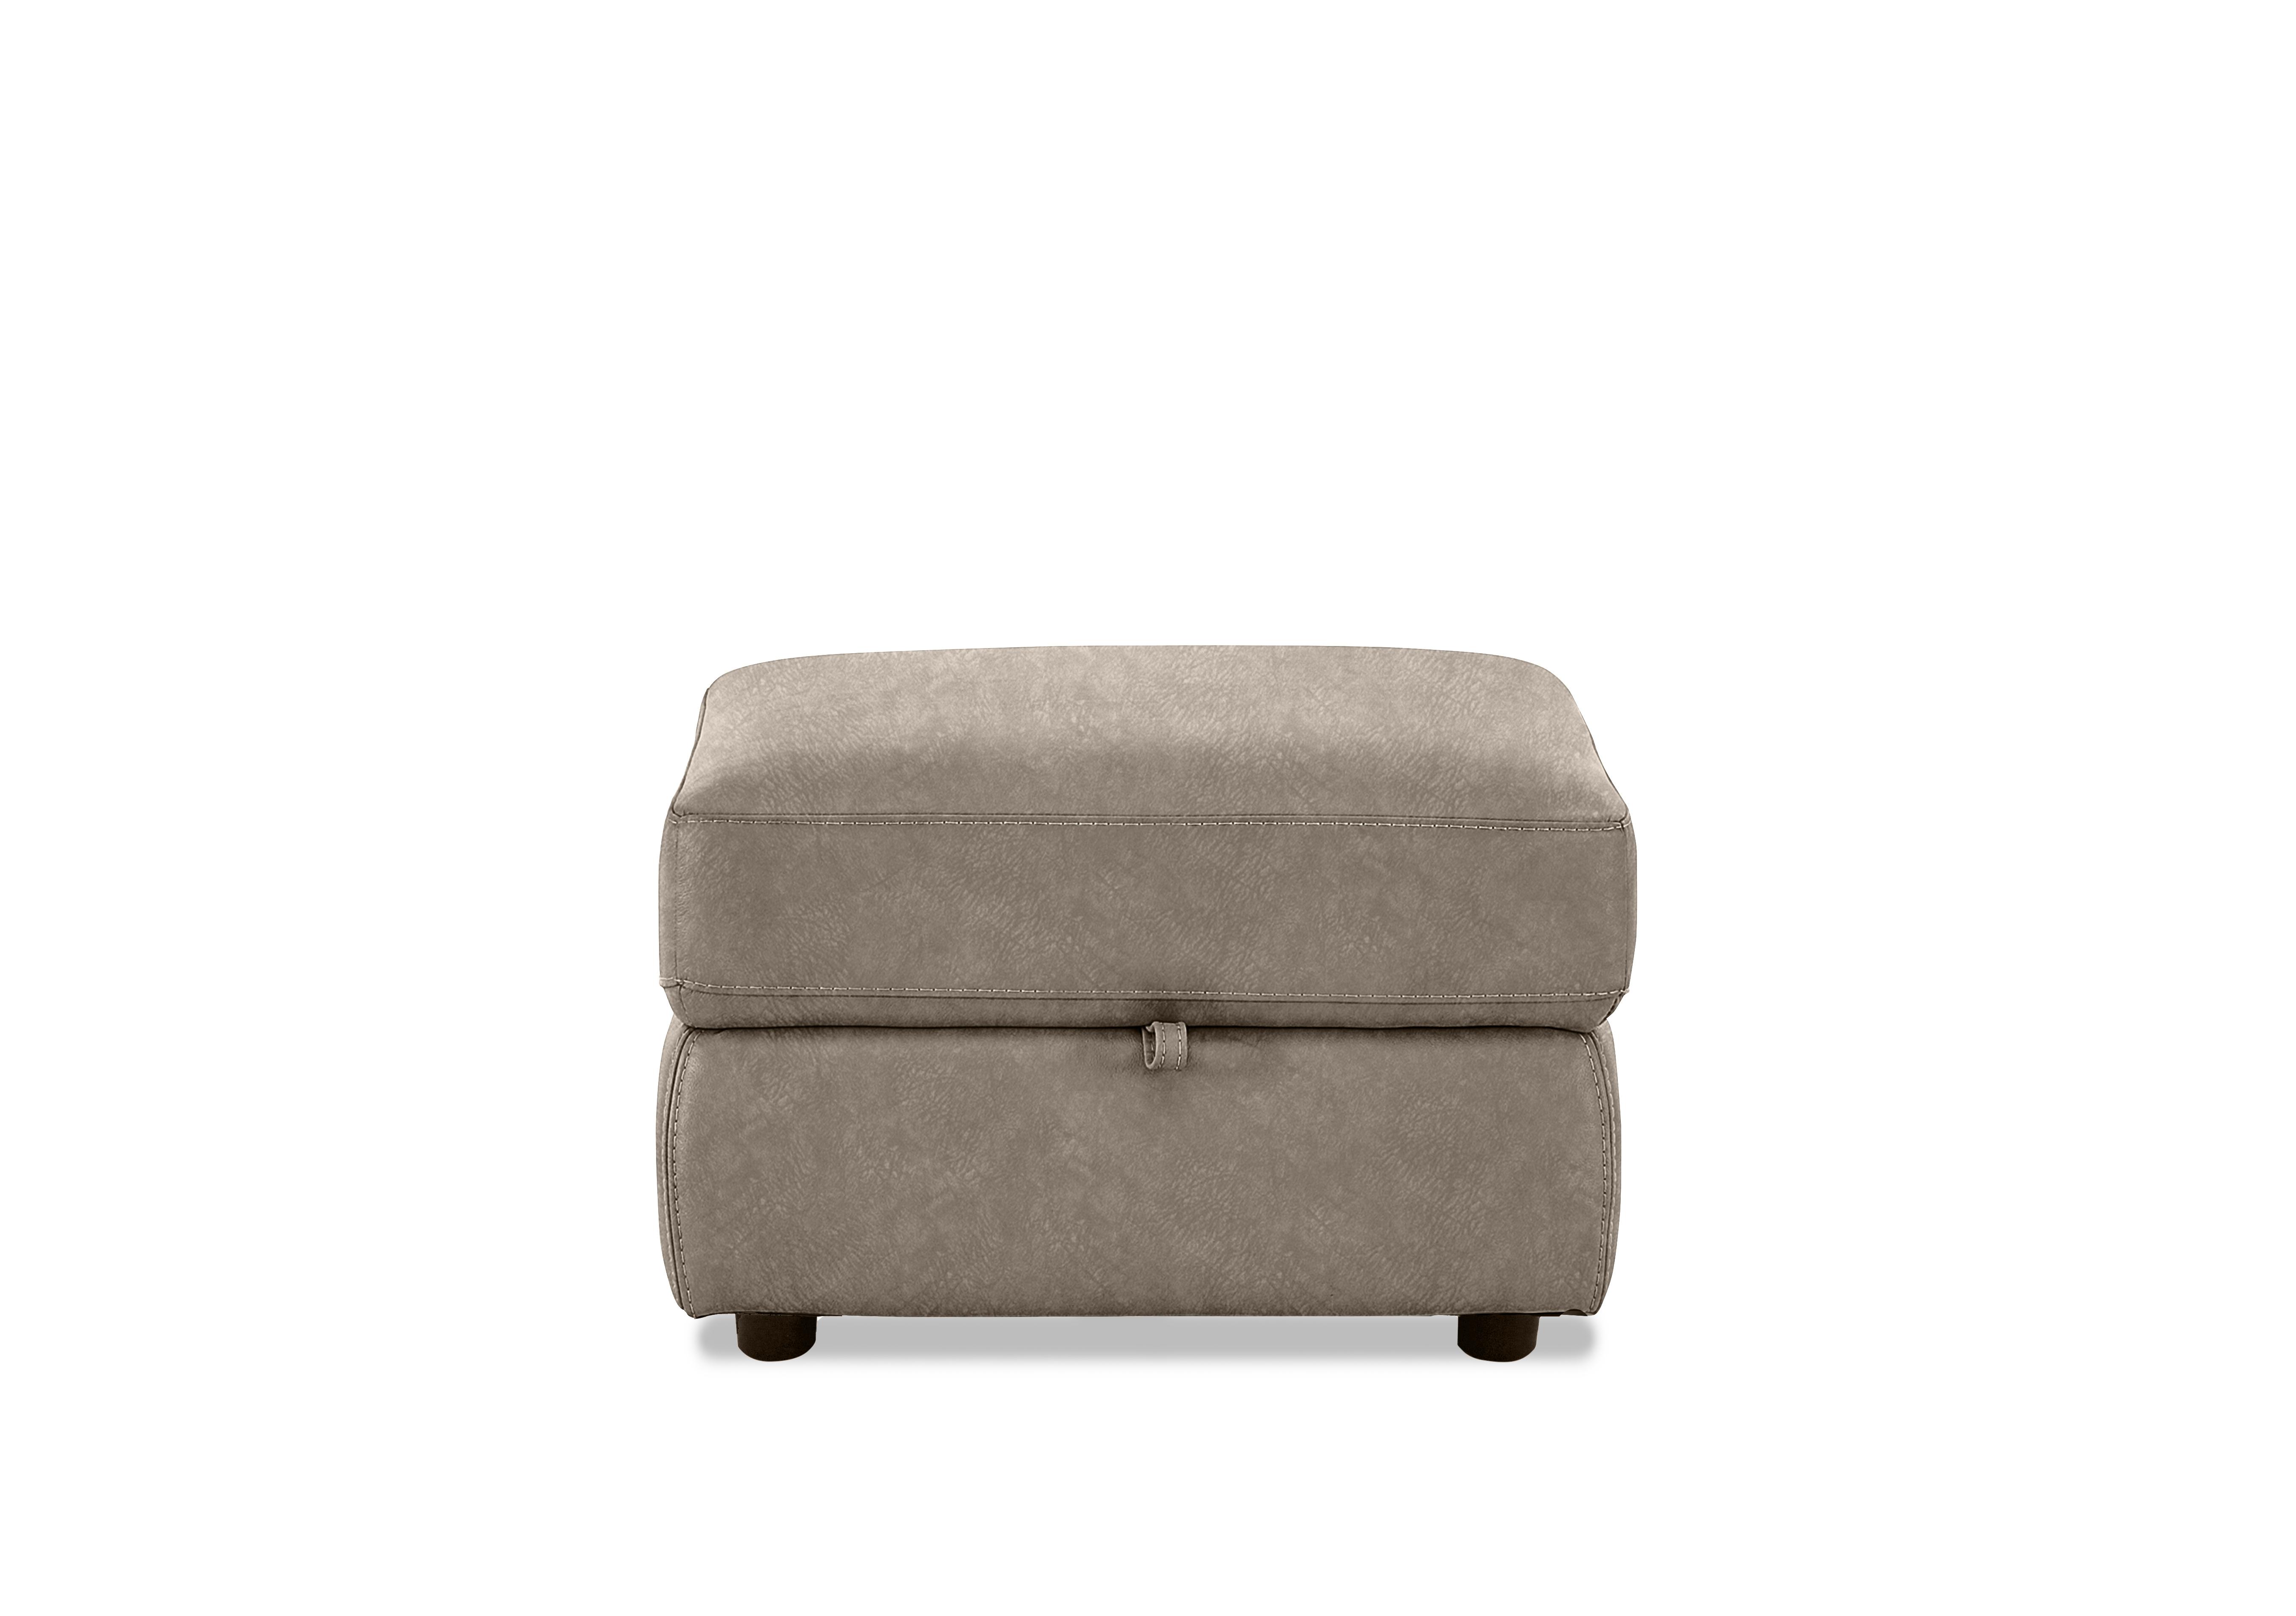 Touch Fabric Storage Footstool in Bfa-Bnn-R29 Fv1 Mink on Furniture Village